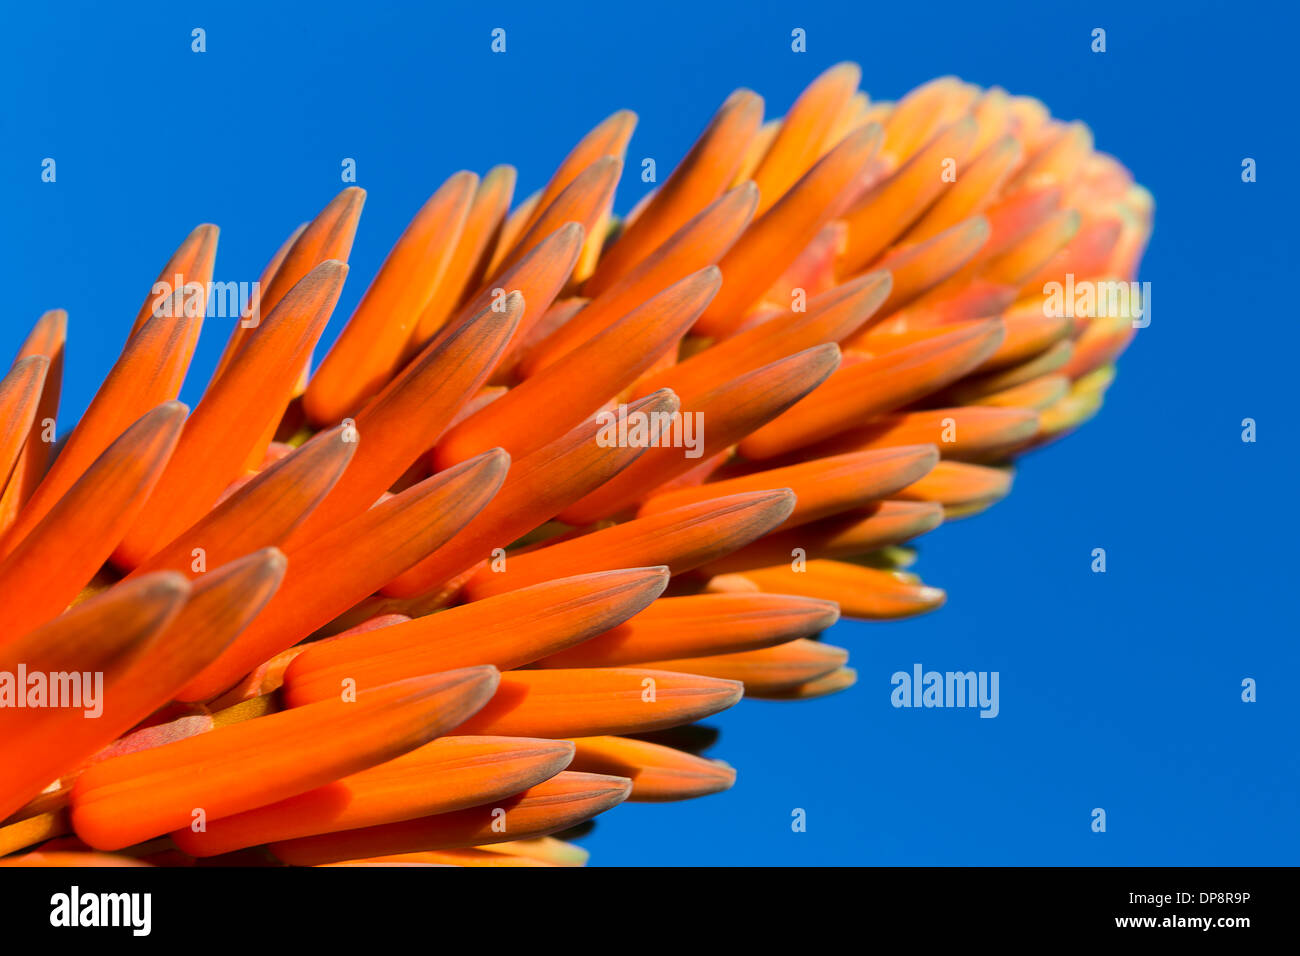 Orange cactus flower in the sky Stock Photo